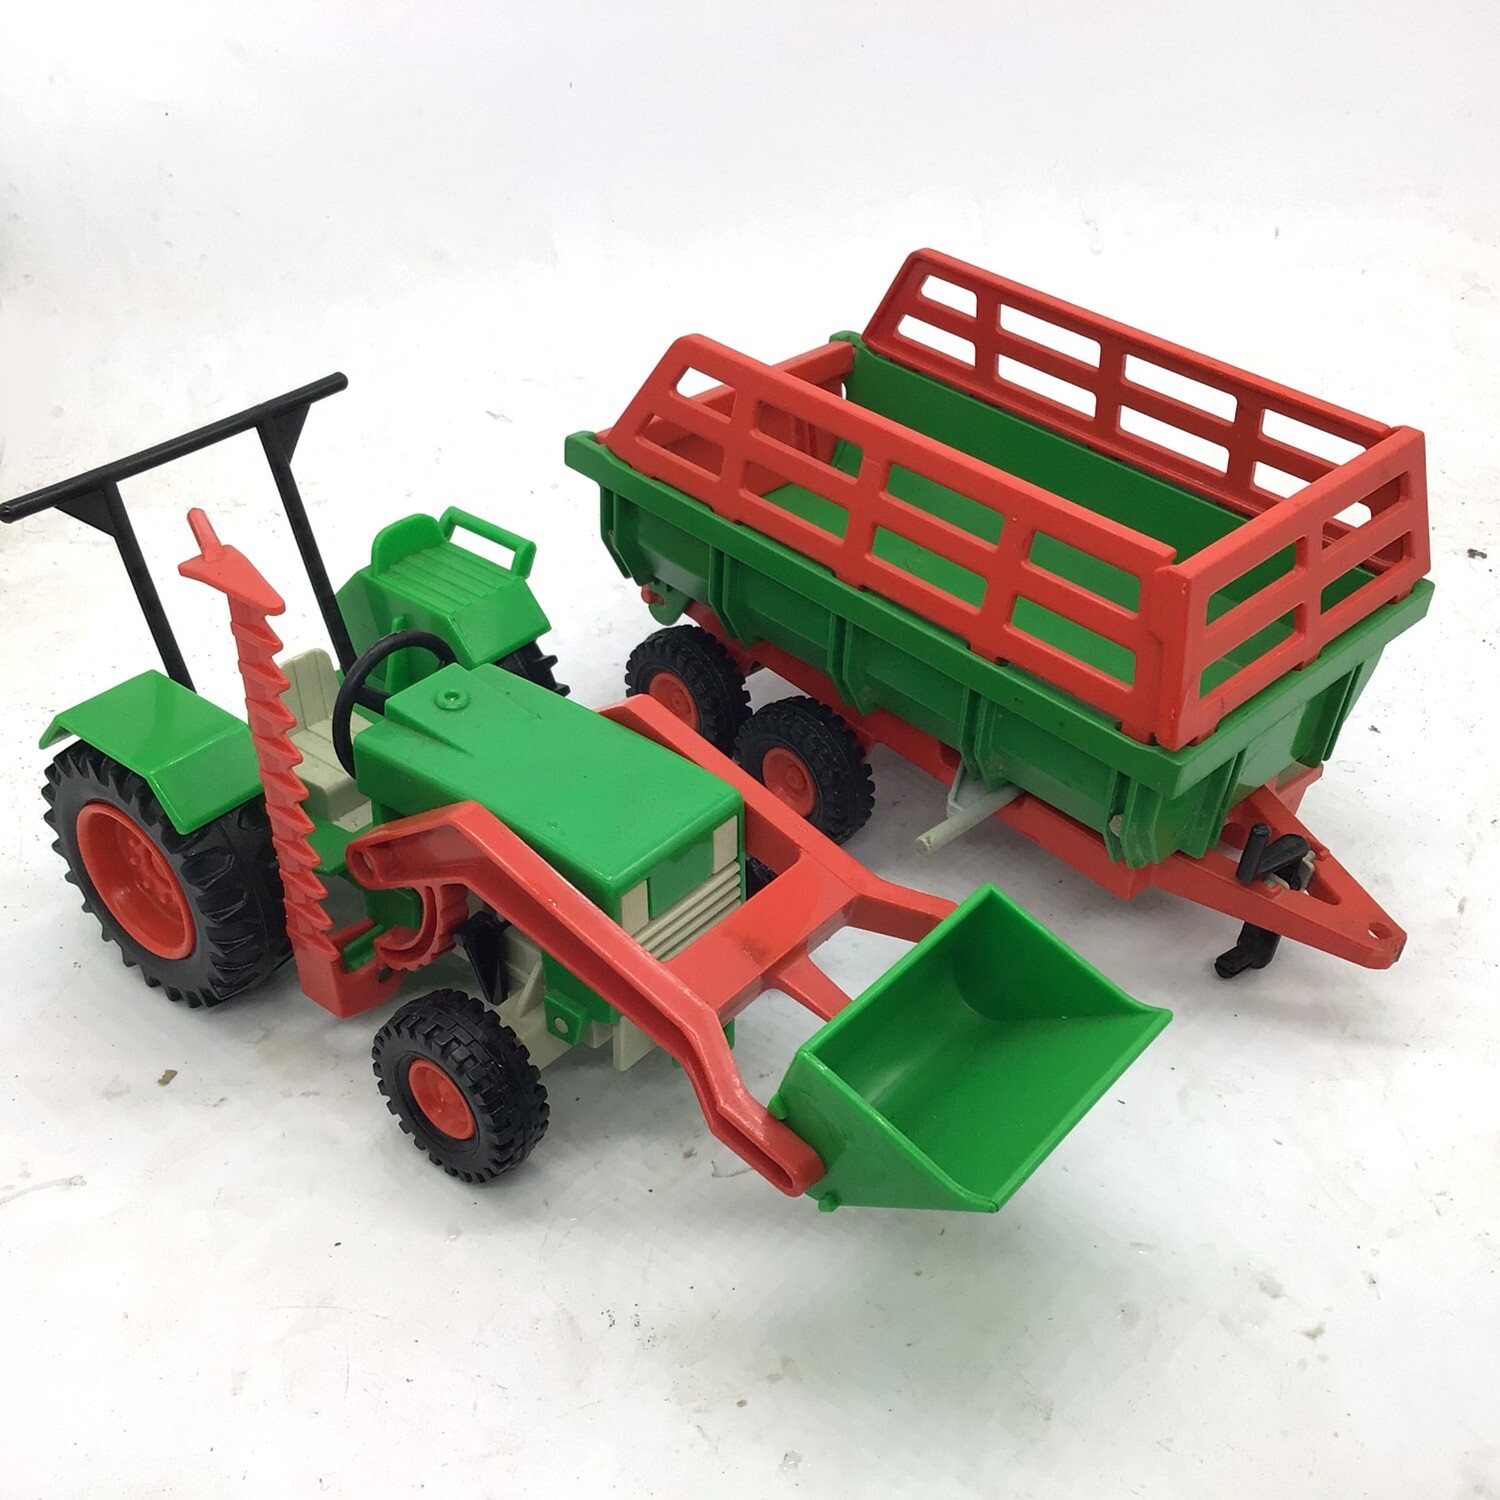 Playmobil Tracteur Vert - playmobil